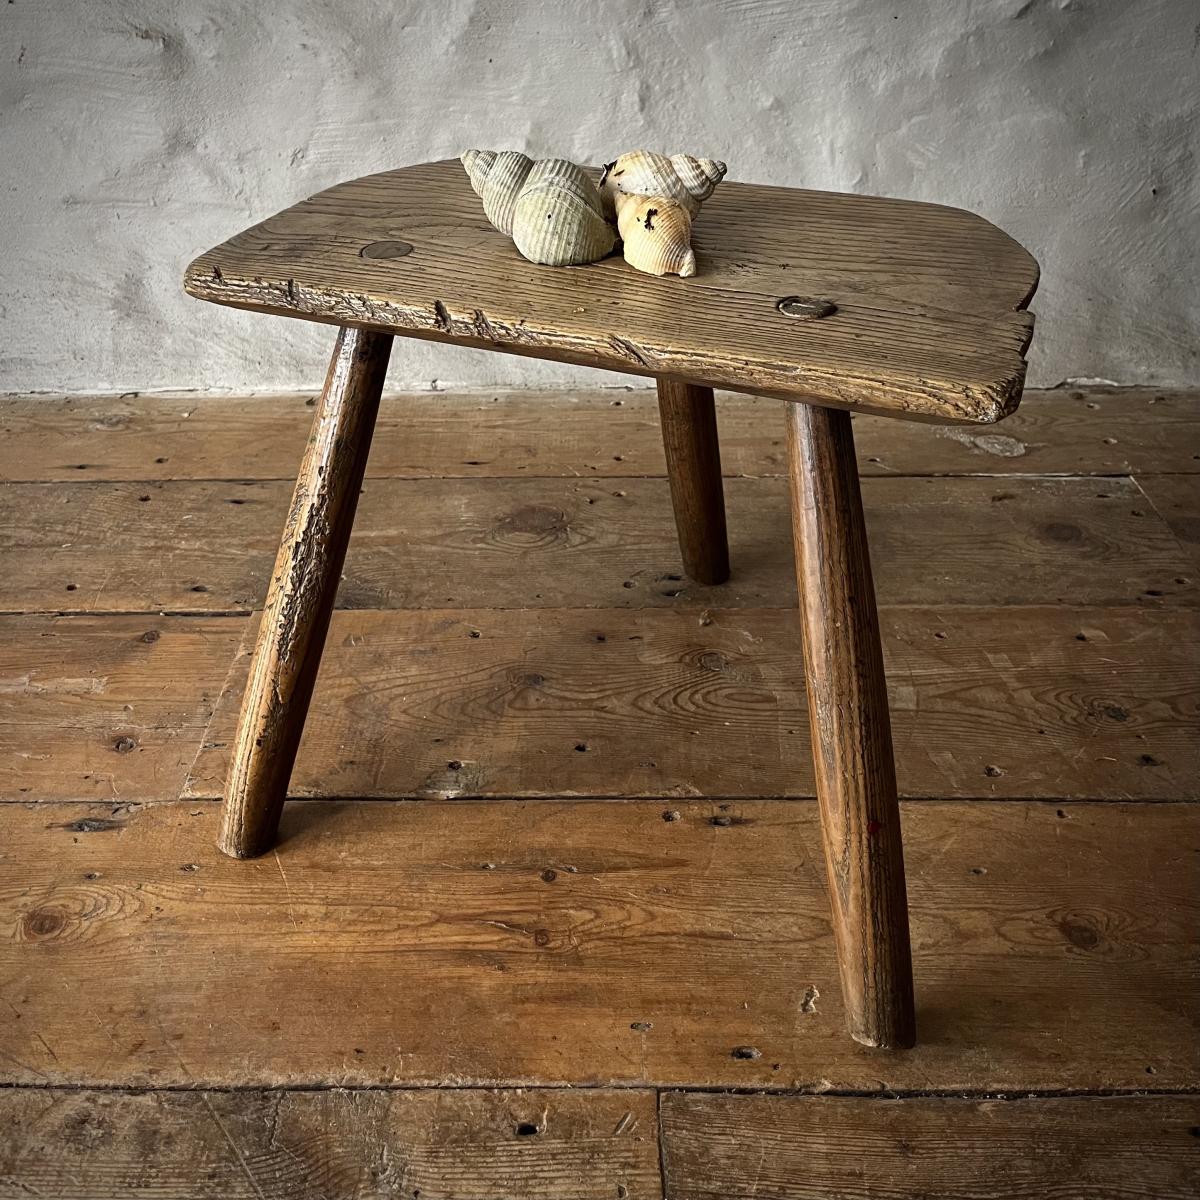 Primitive Welsh stool